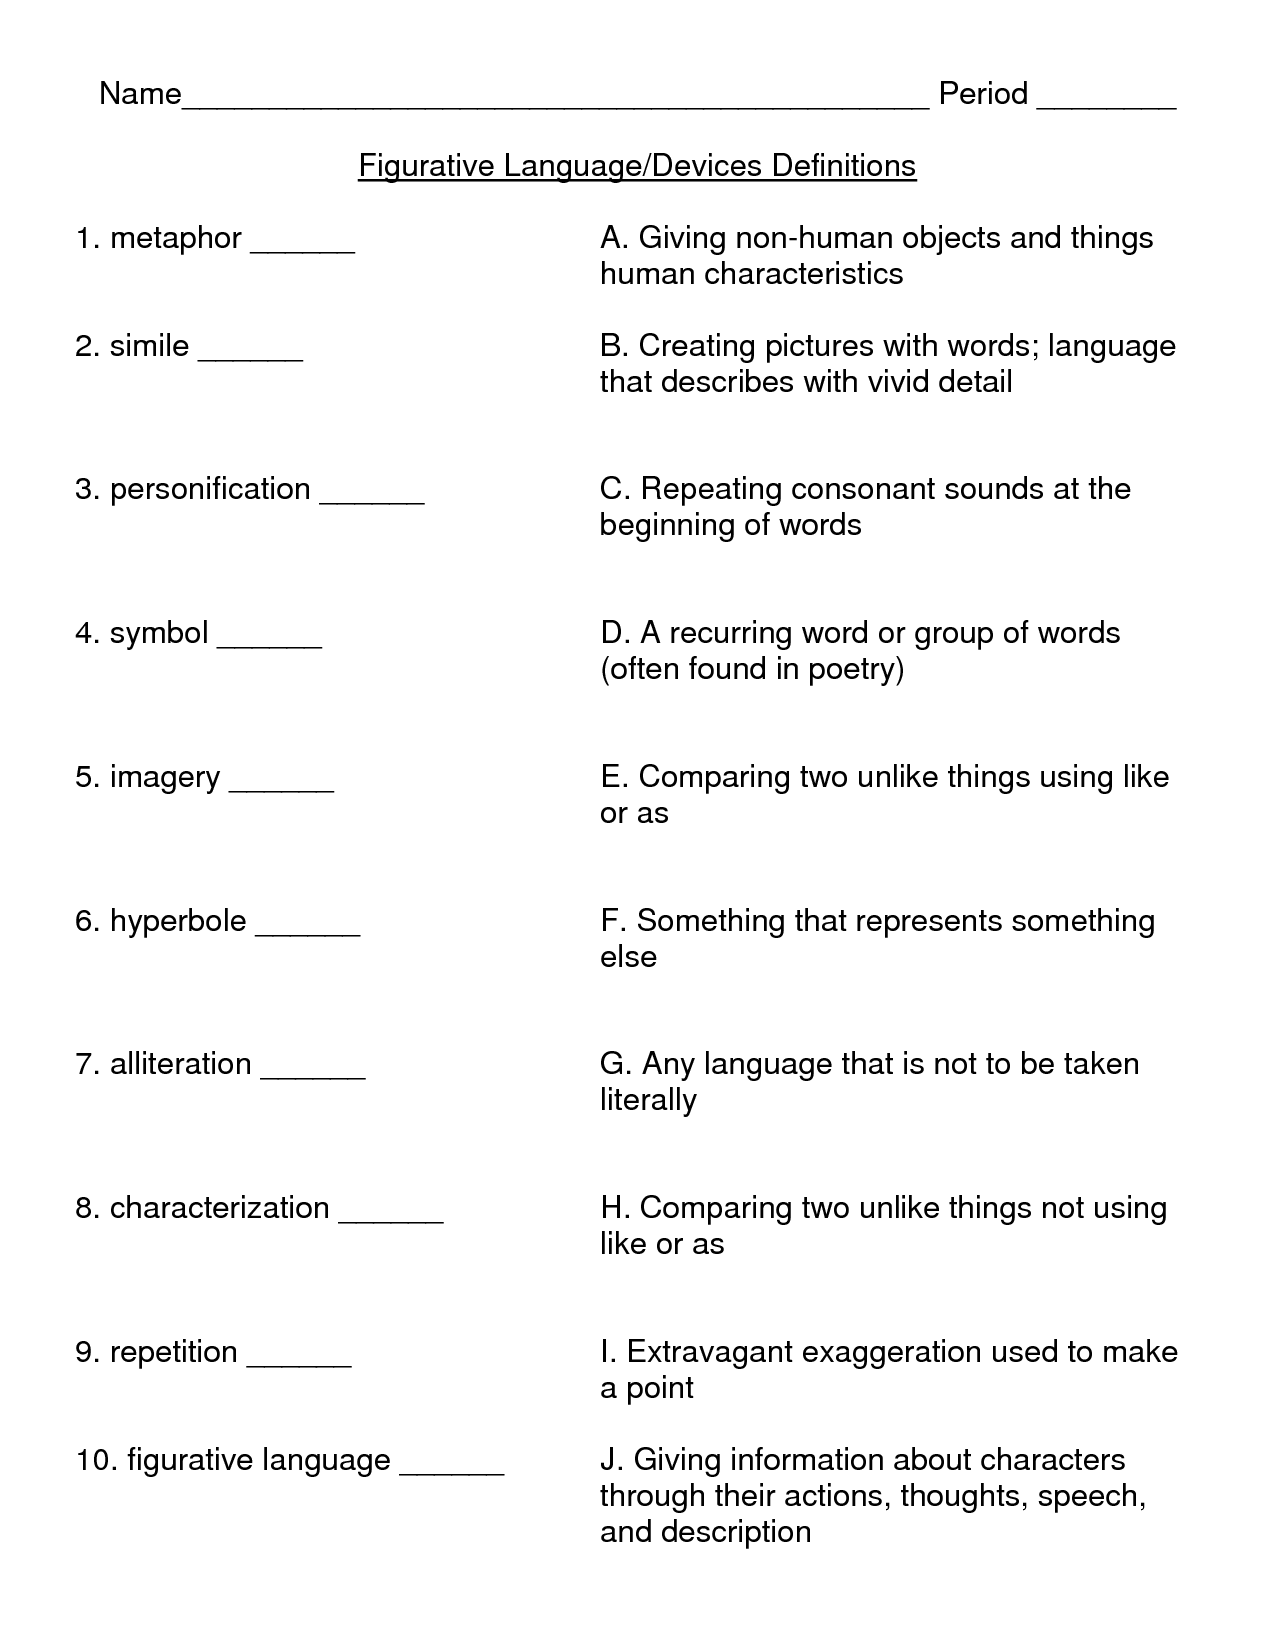 Definition Figurative Language Worksheets Image